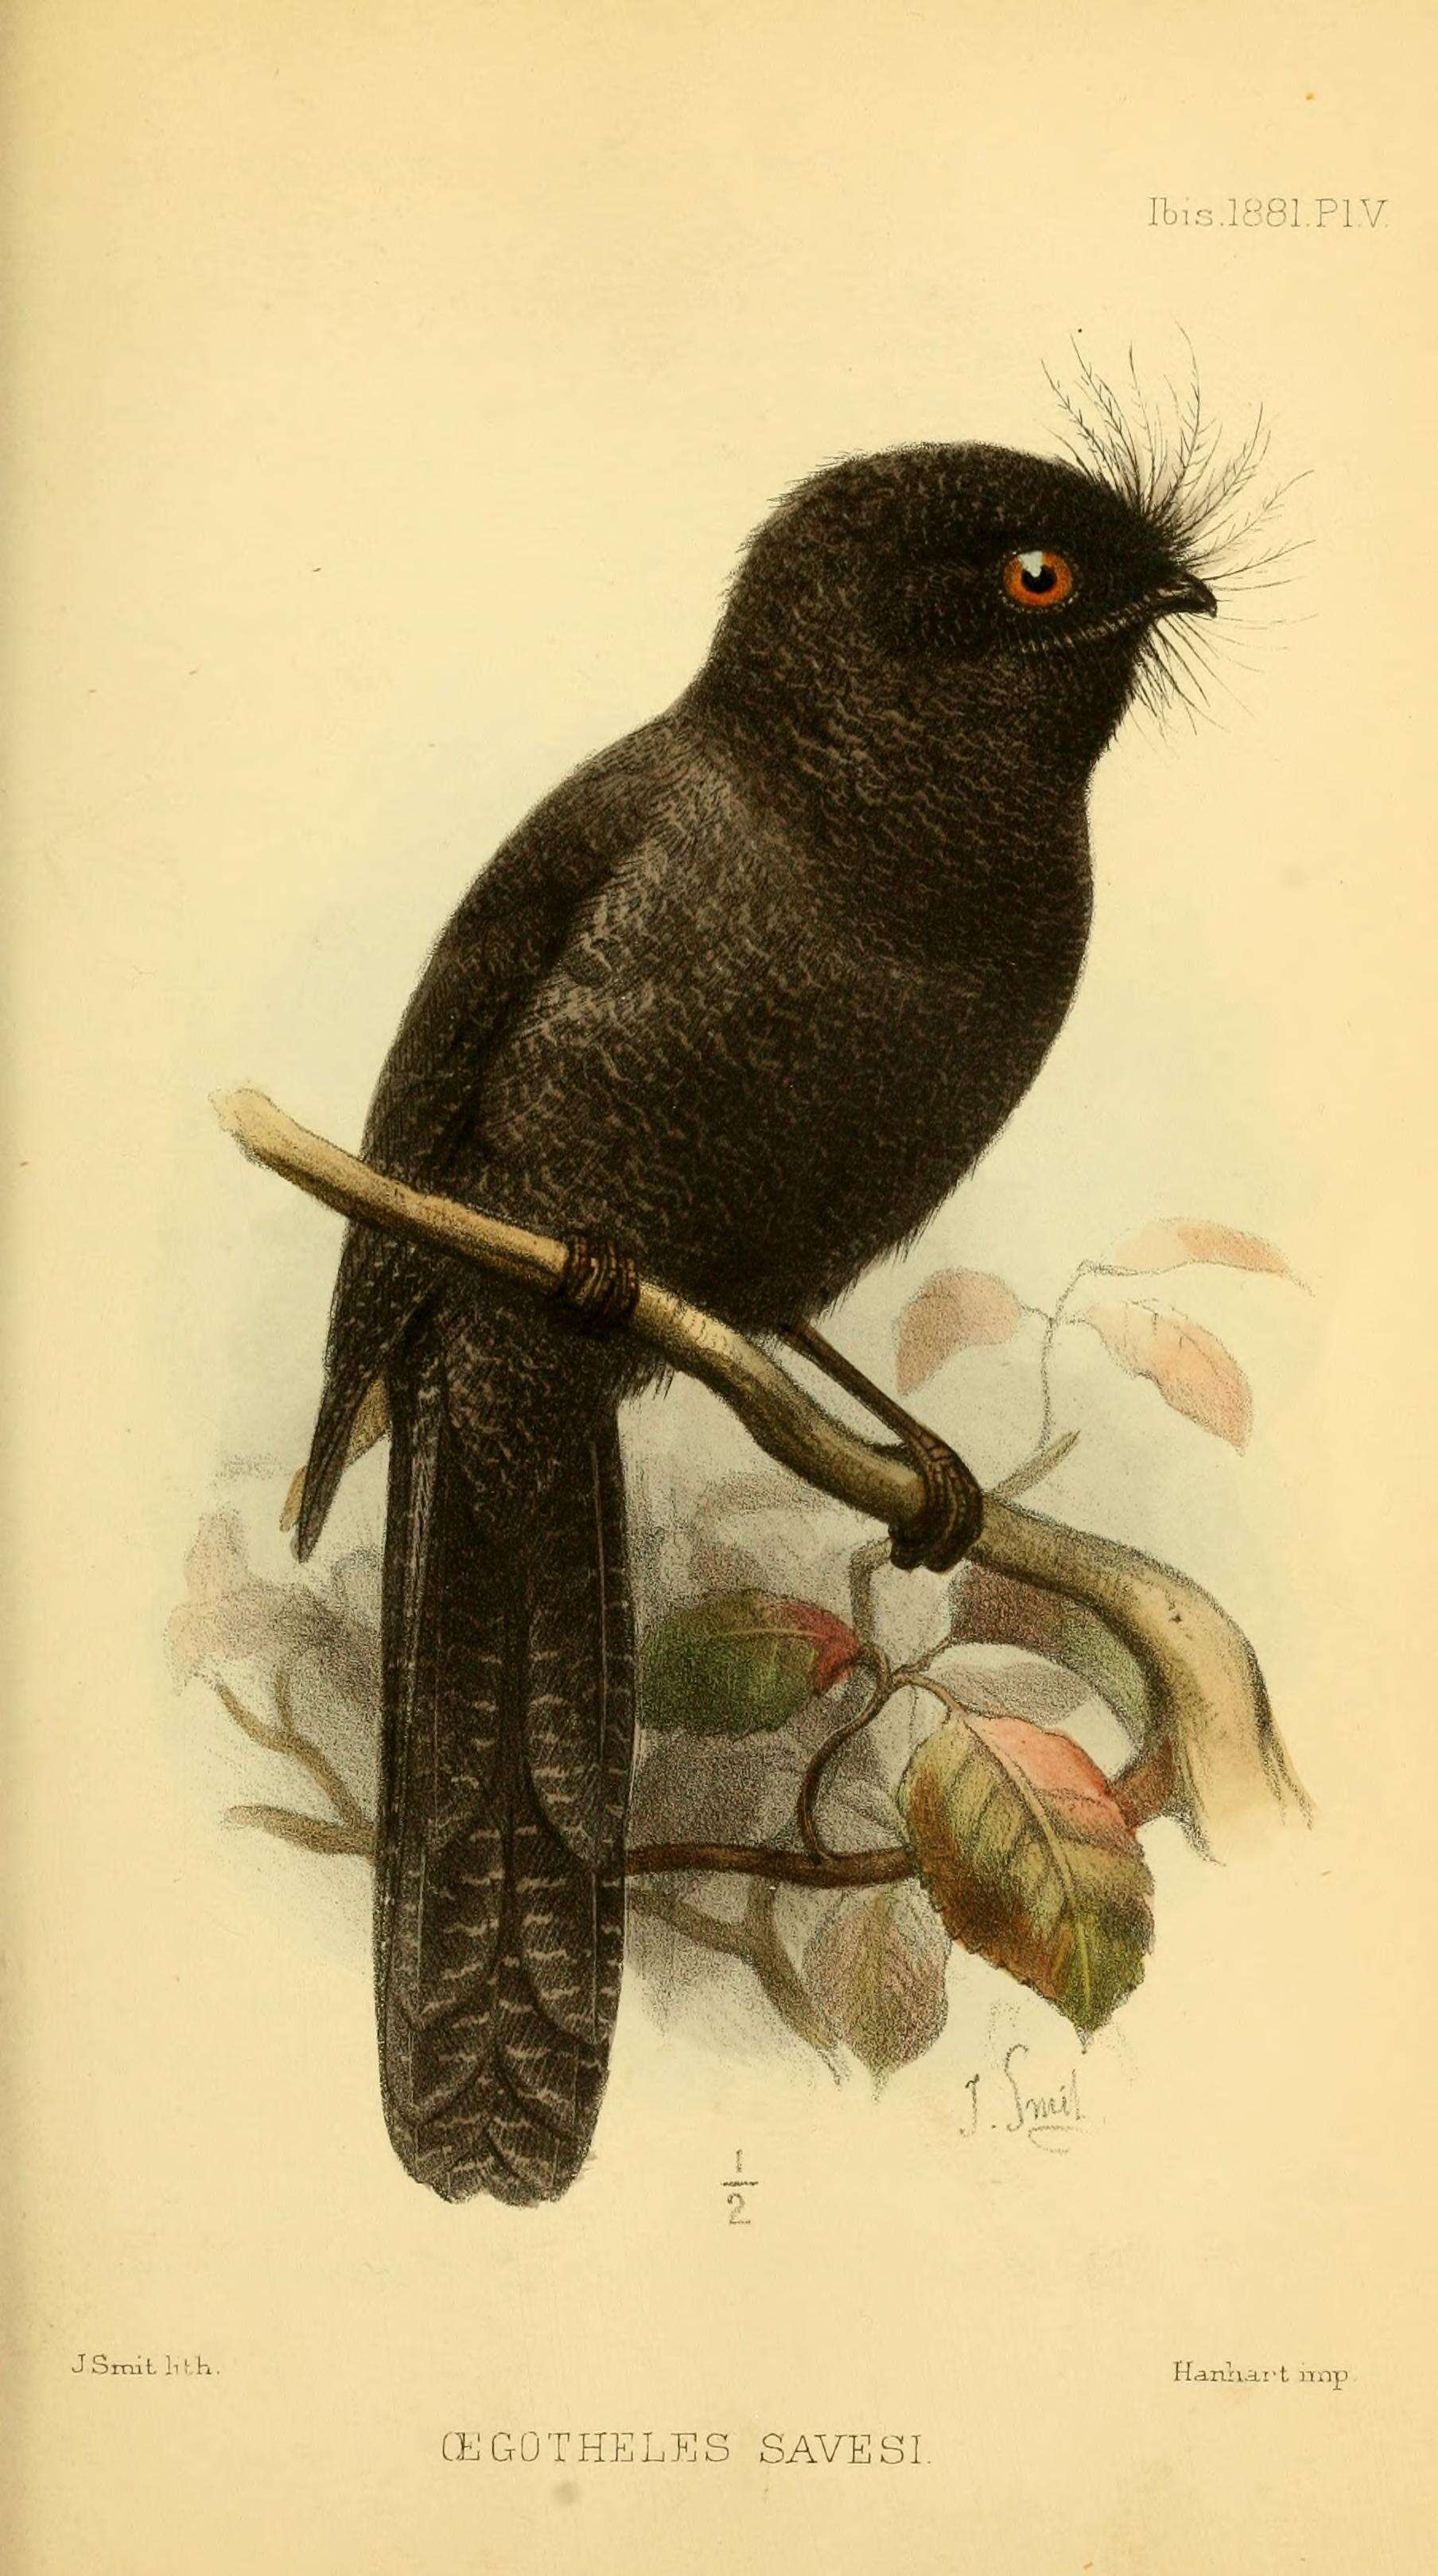 Image of owlet-nightjars